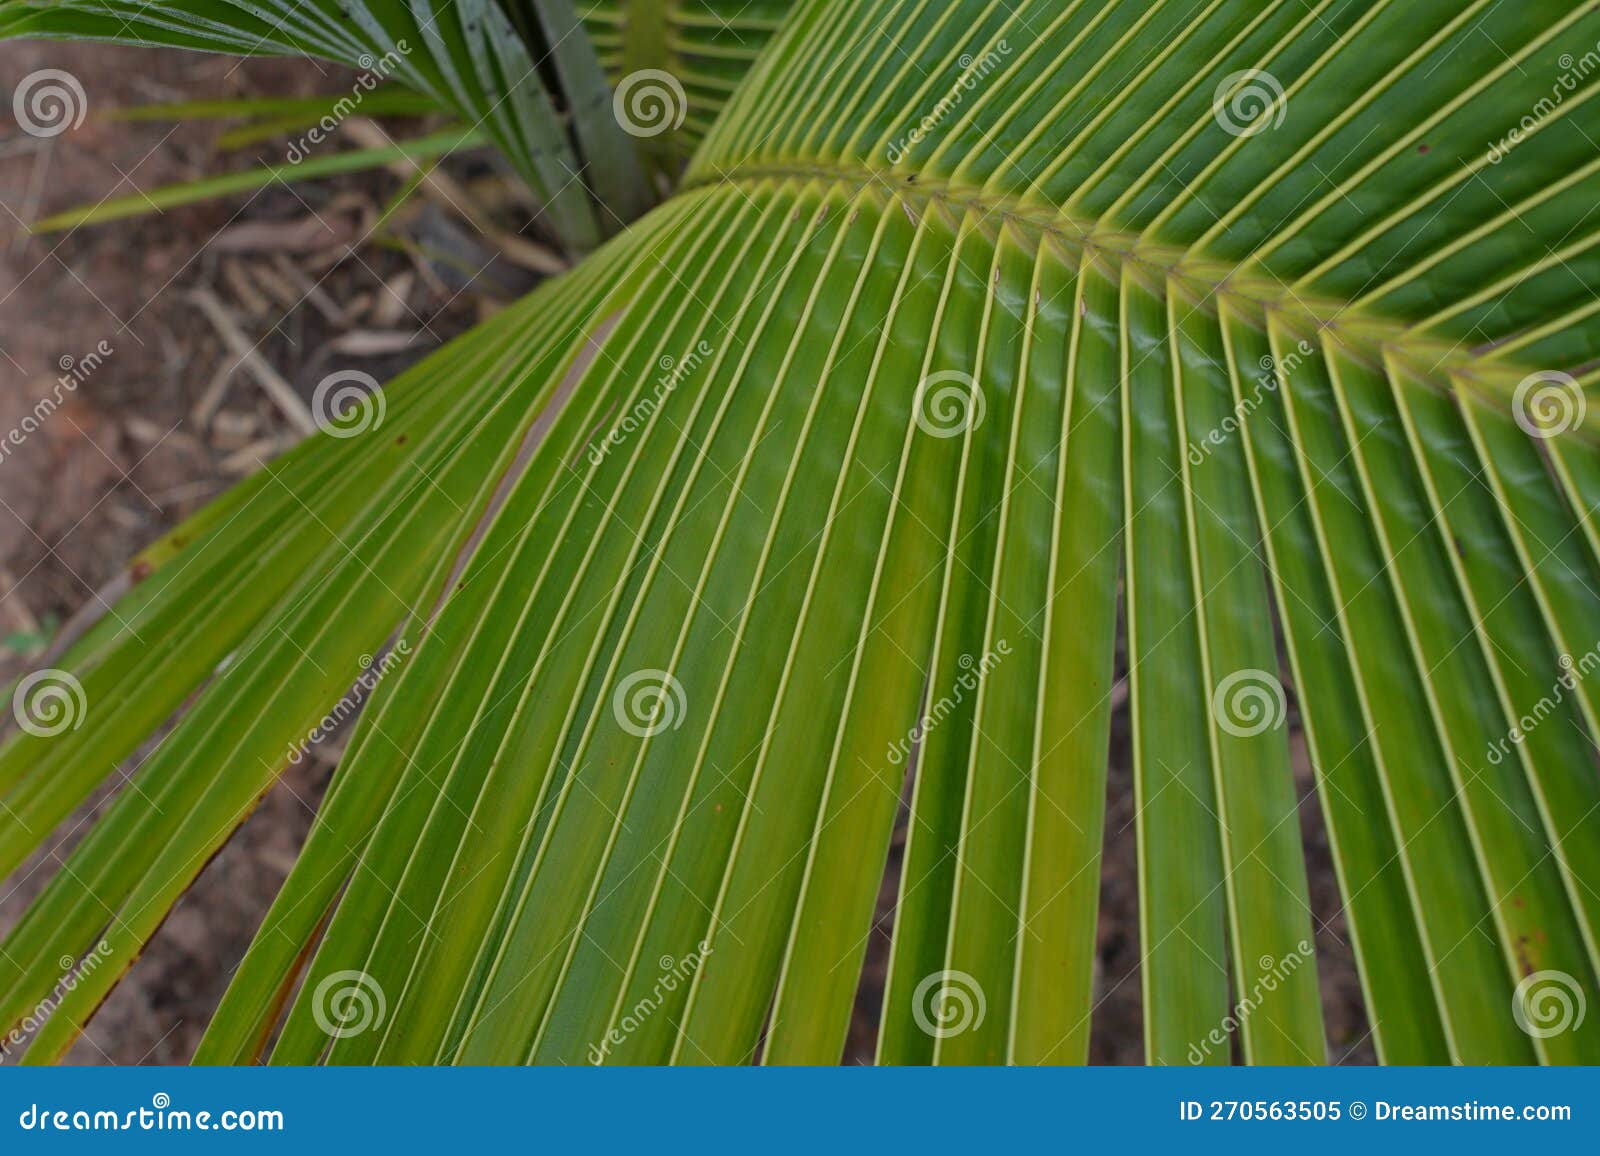 palm tree. palmera rainha leaf with zoom style photo, brazil, south america, blurred background